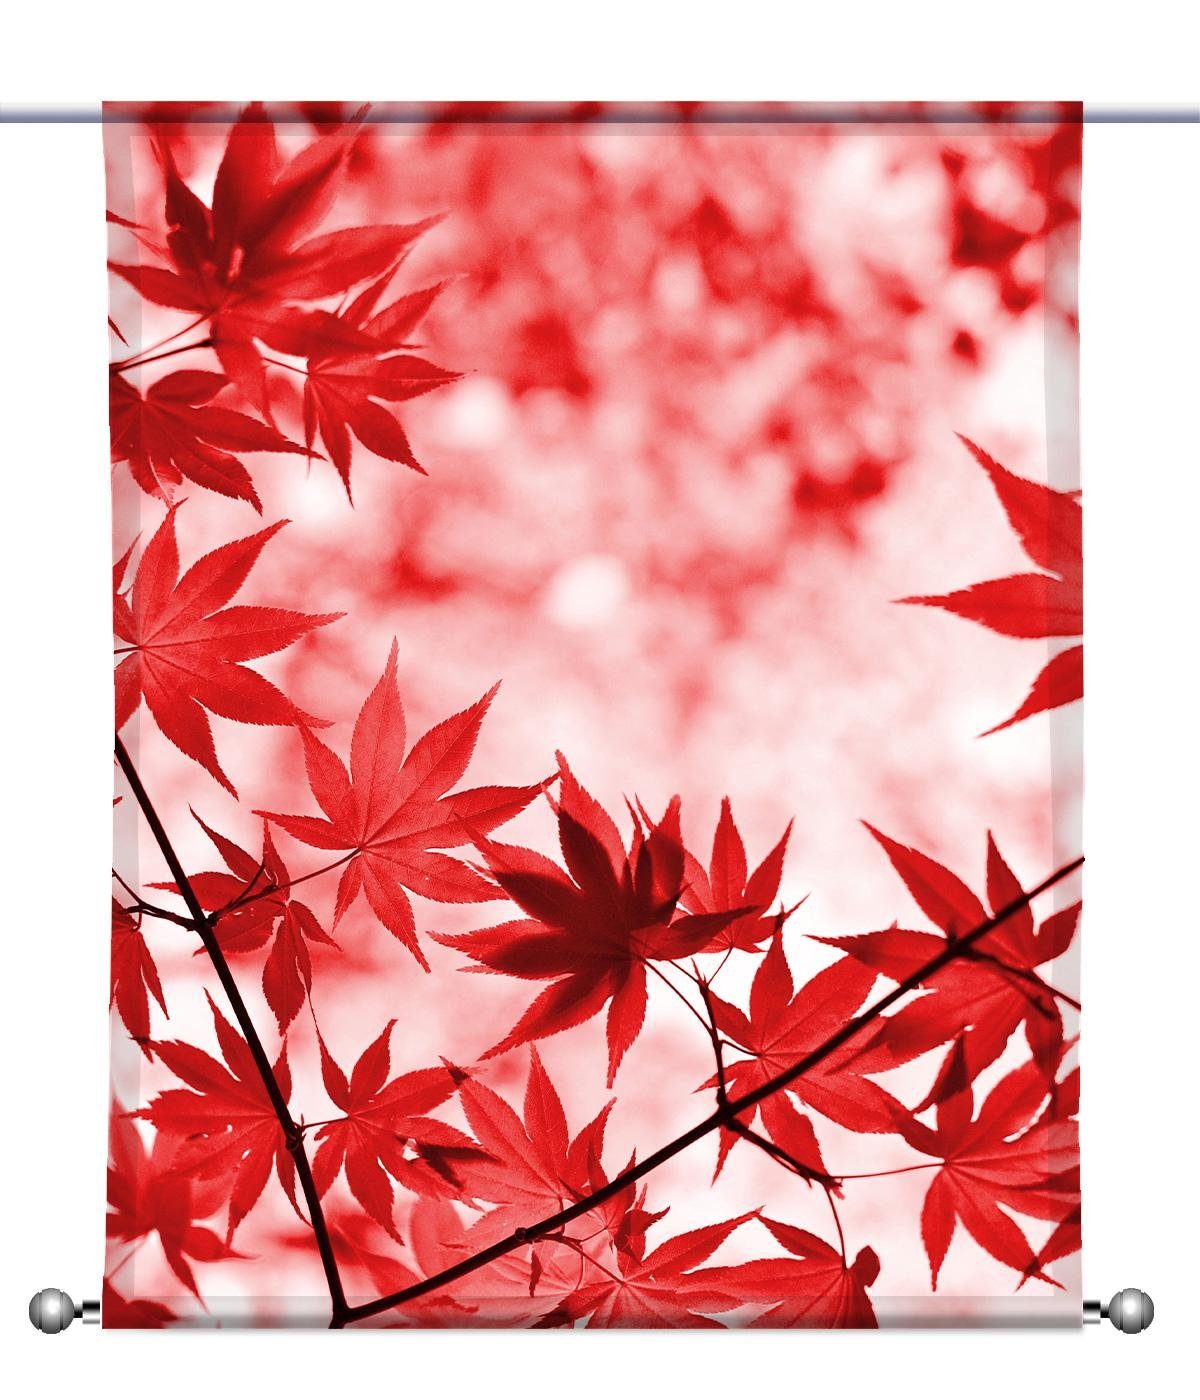 - Scheibenhänger rechteckig mit Roter gardinen-for-life Scheibengardine Beschwerung, Herbst